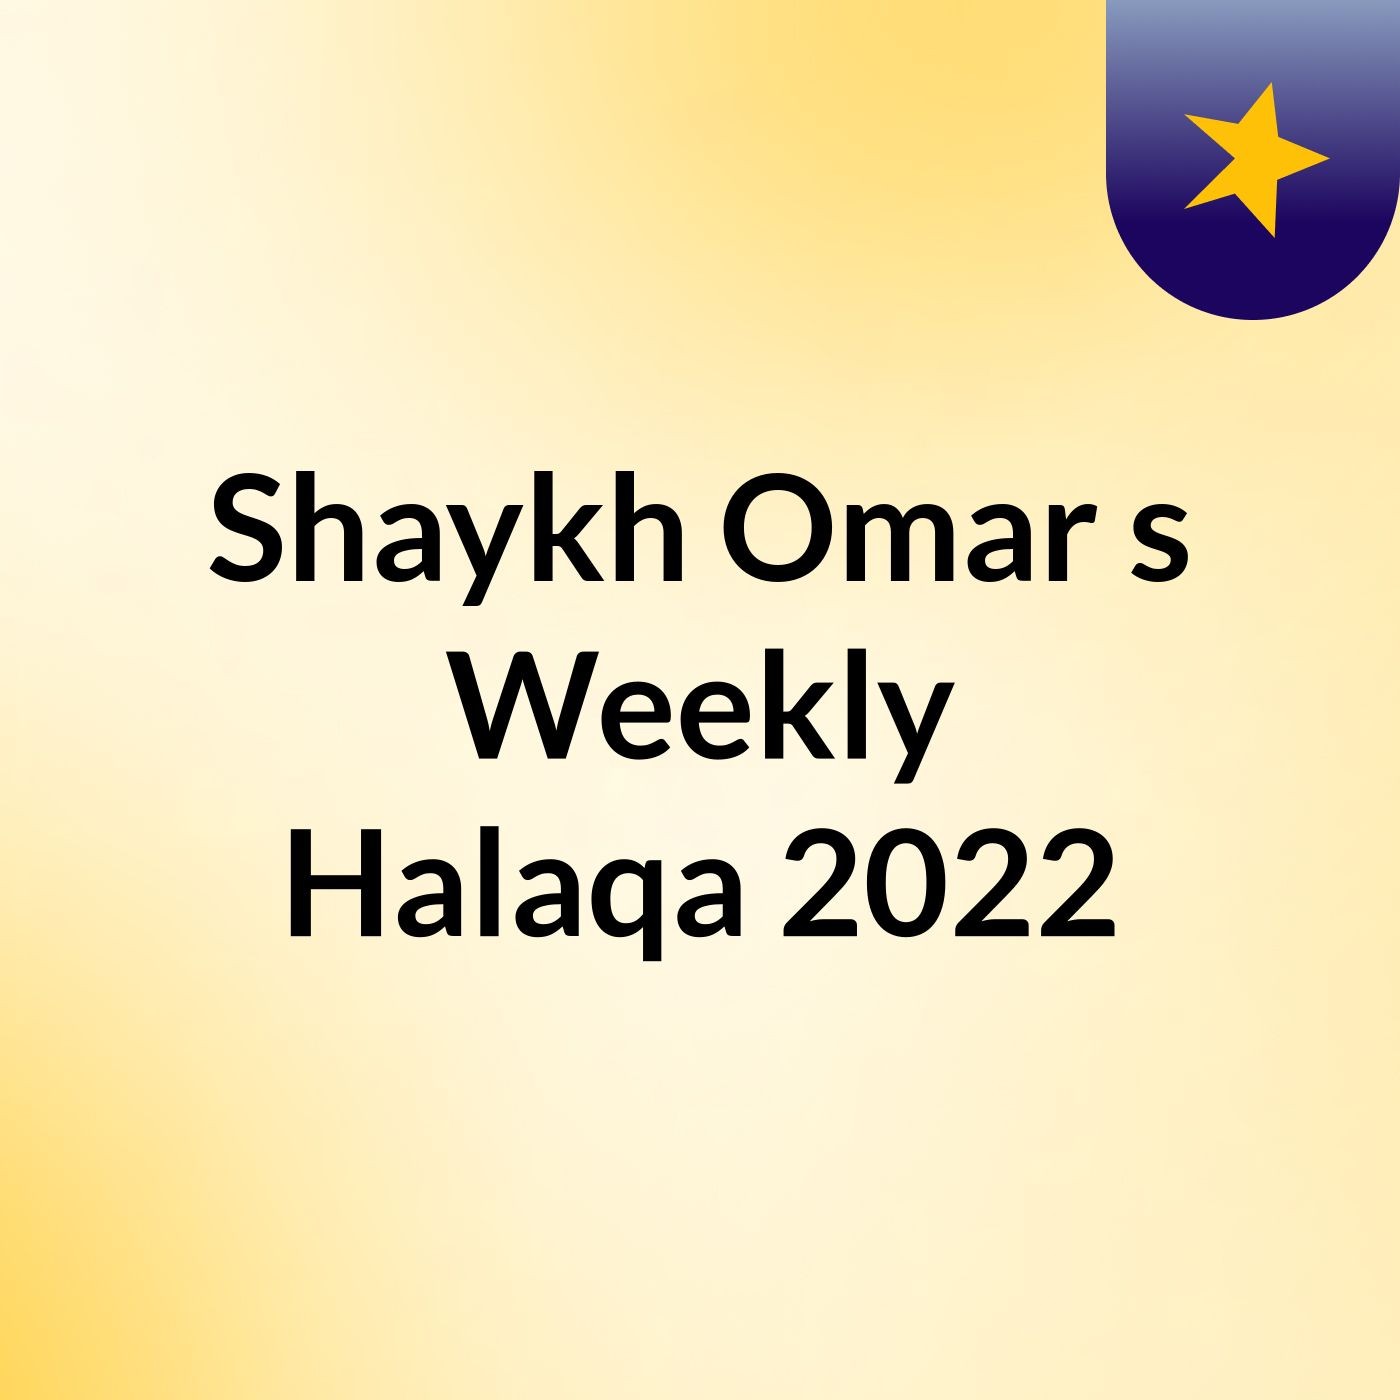 Shaykh Omar’s Weekly Halaqa 2022